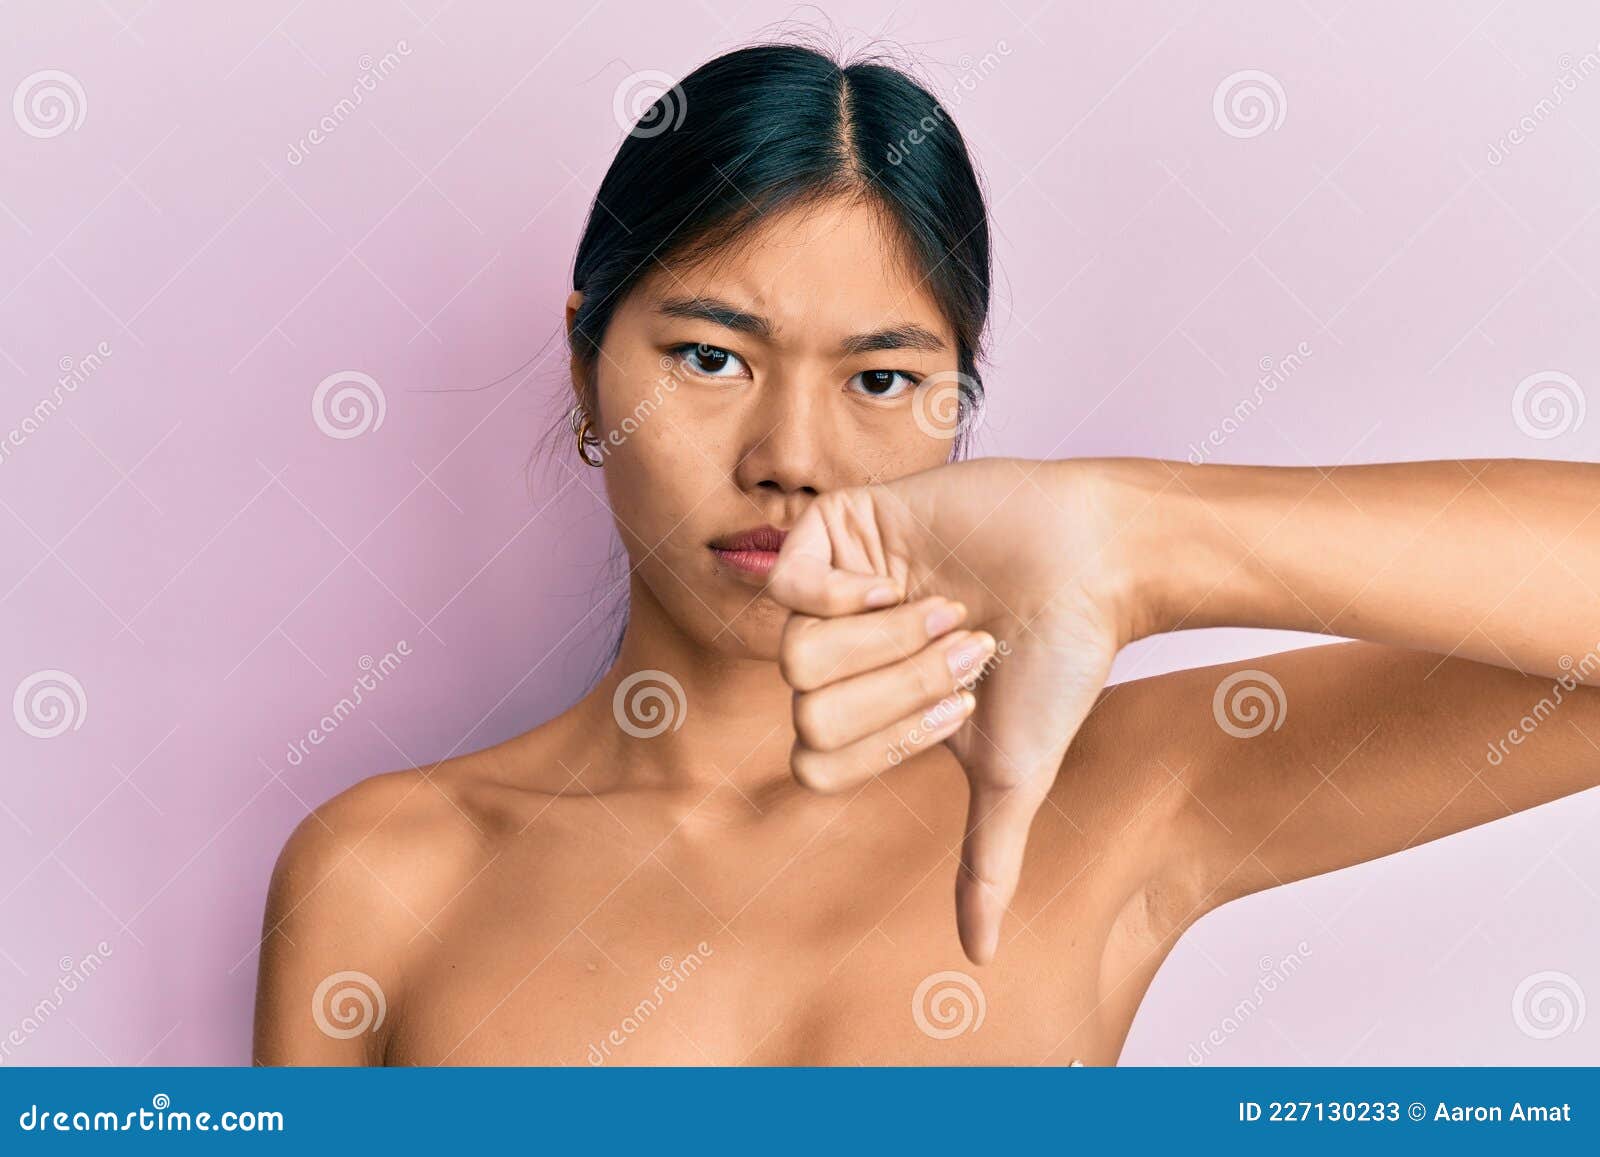 Asian Woman Naked